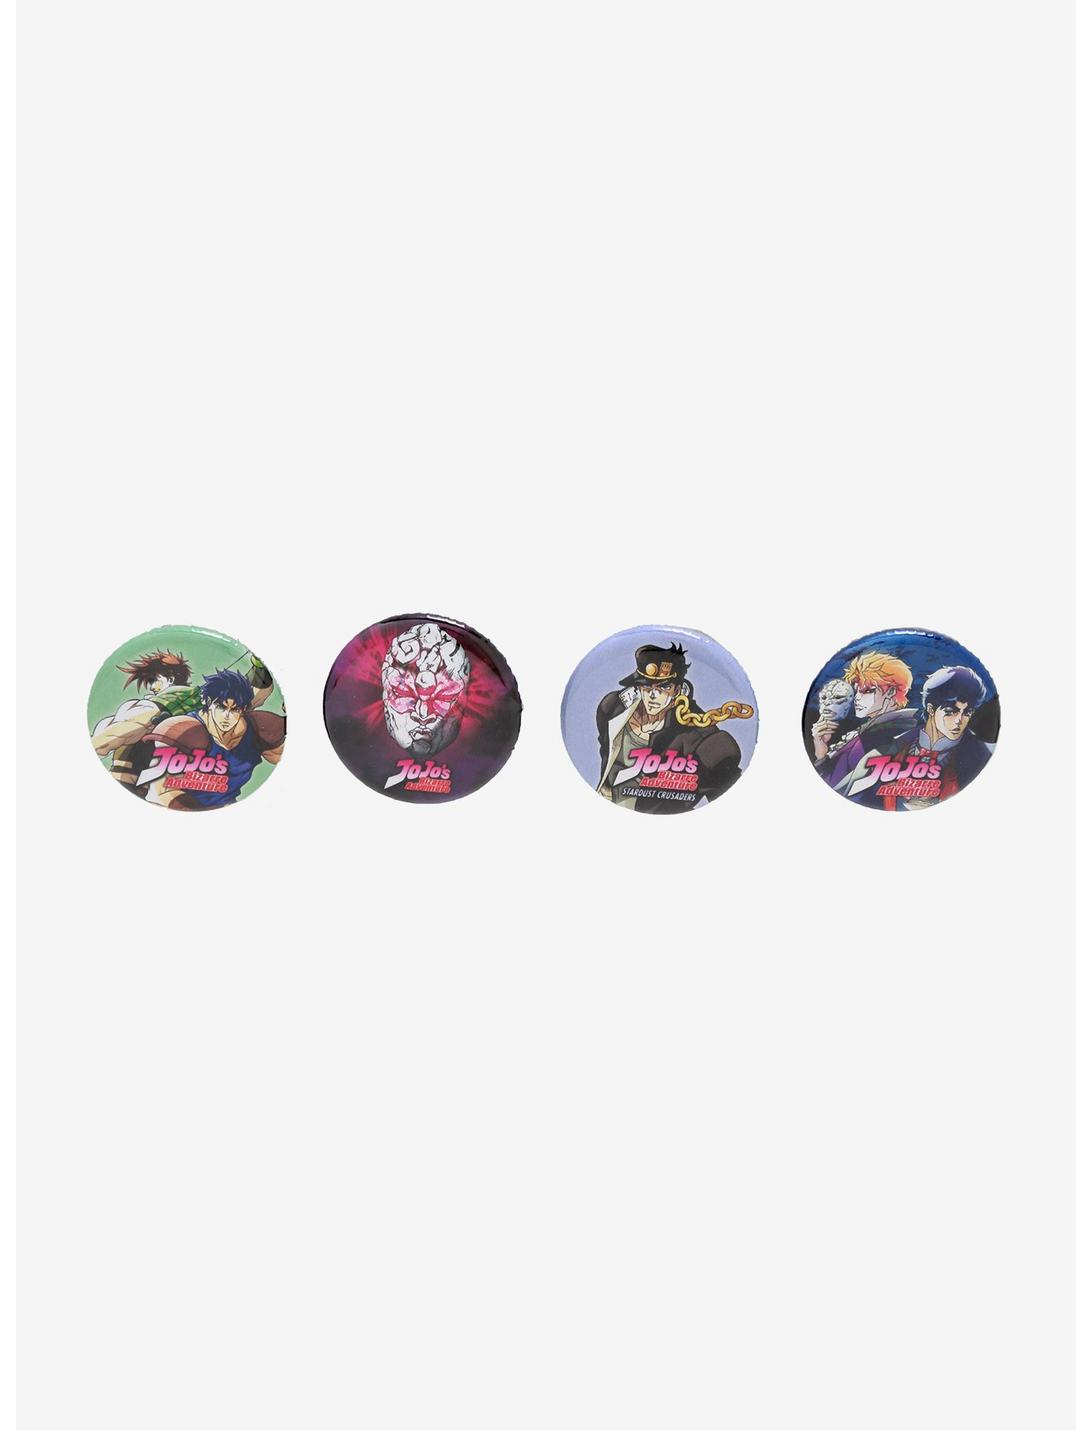 JoJo's Bizarre Adventure Characters Button Set, , hi-res